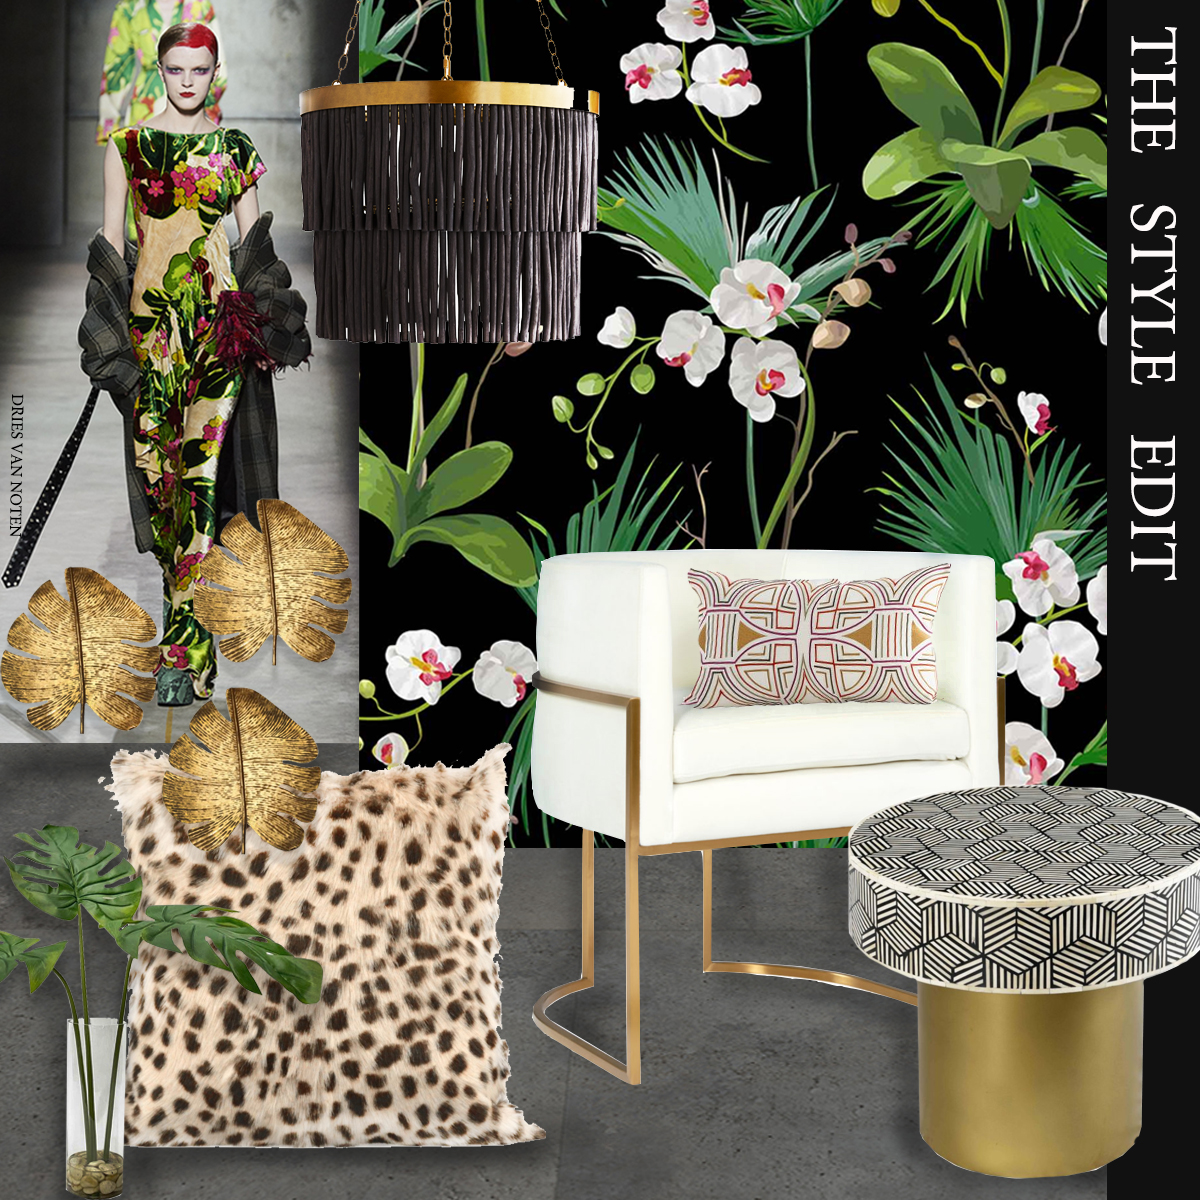 The Style Edit - Vogue Garden by Michele Pelafas